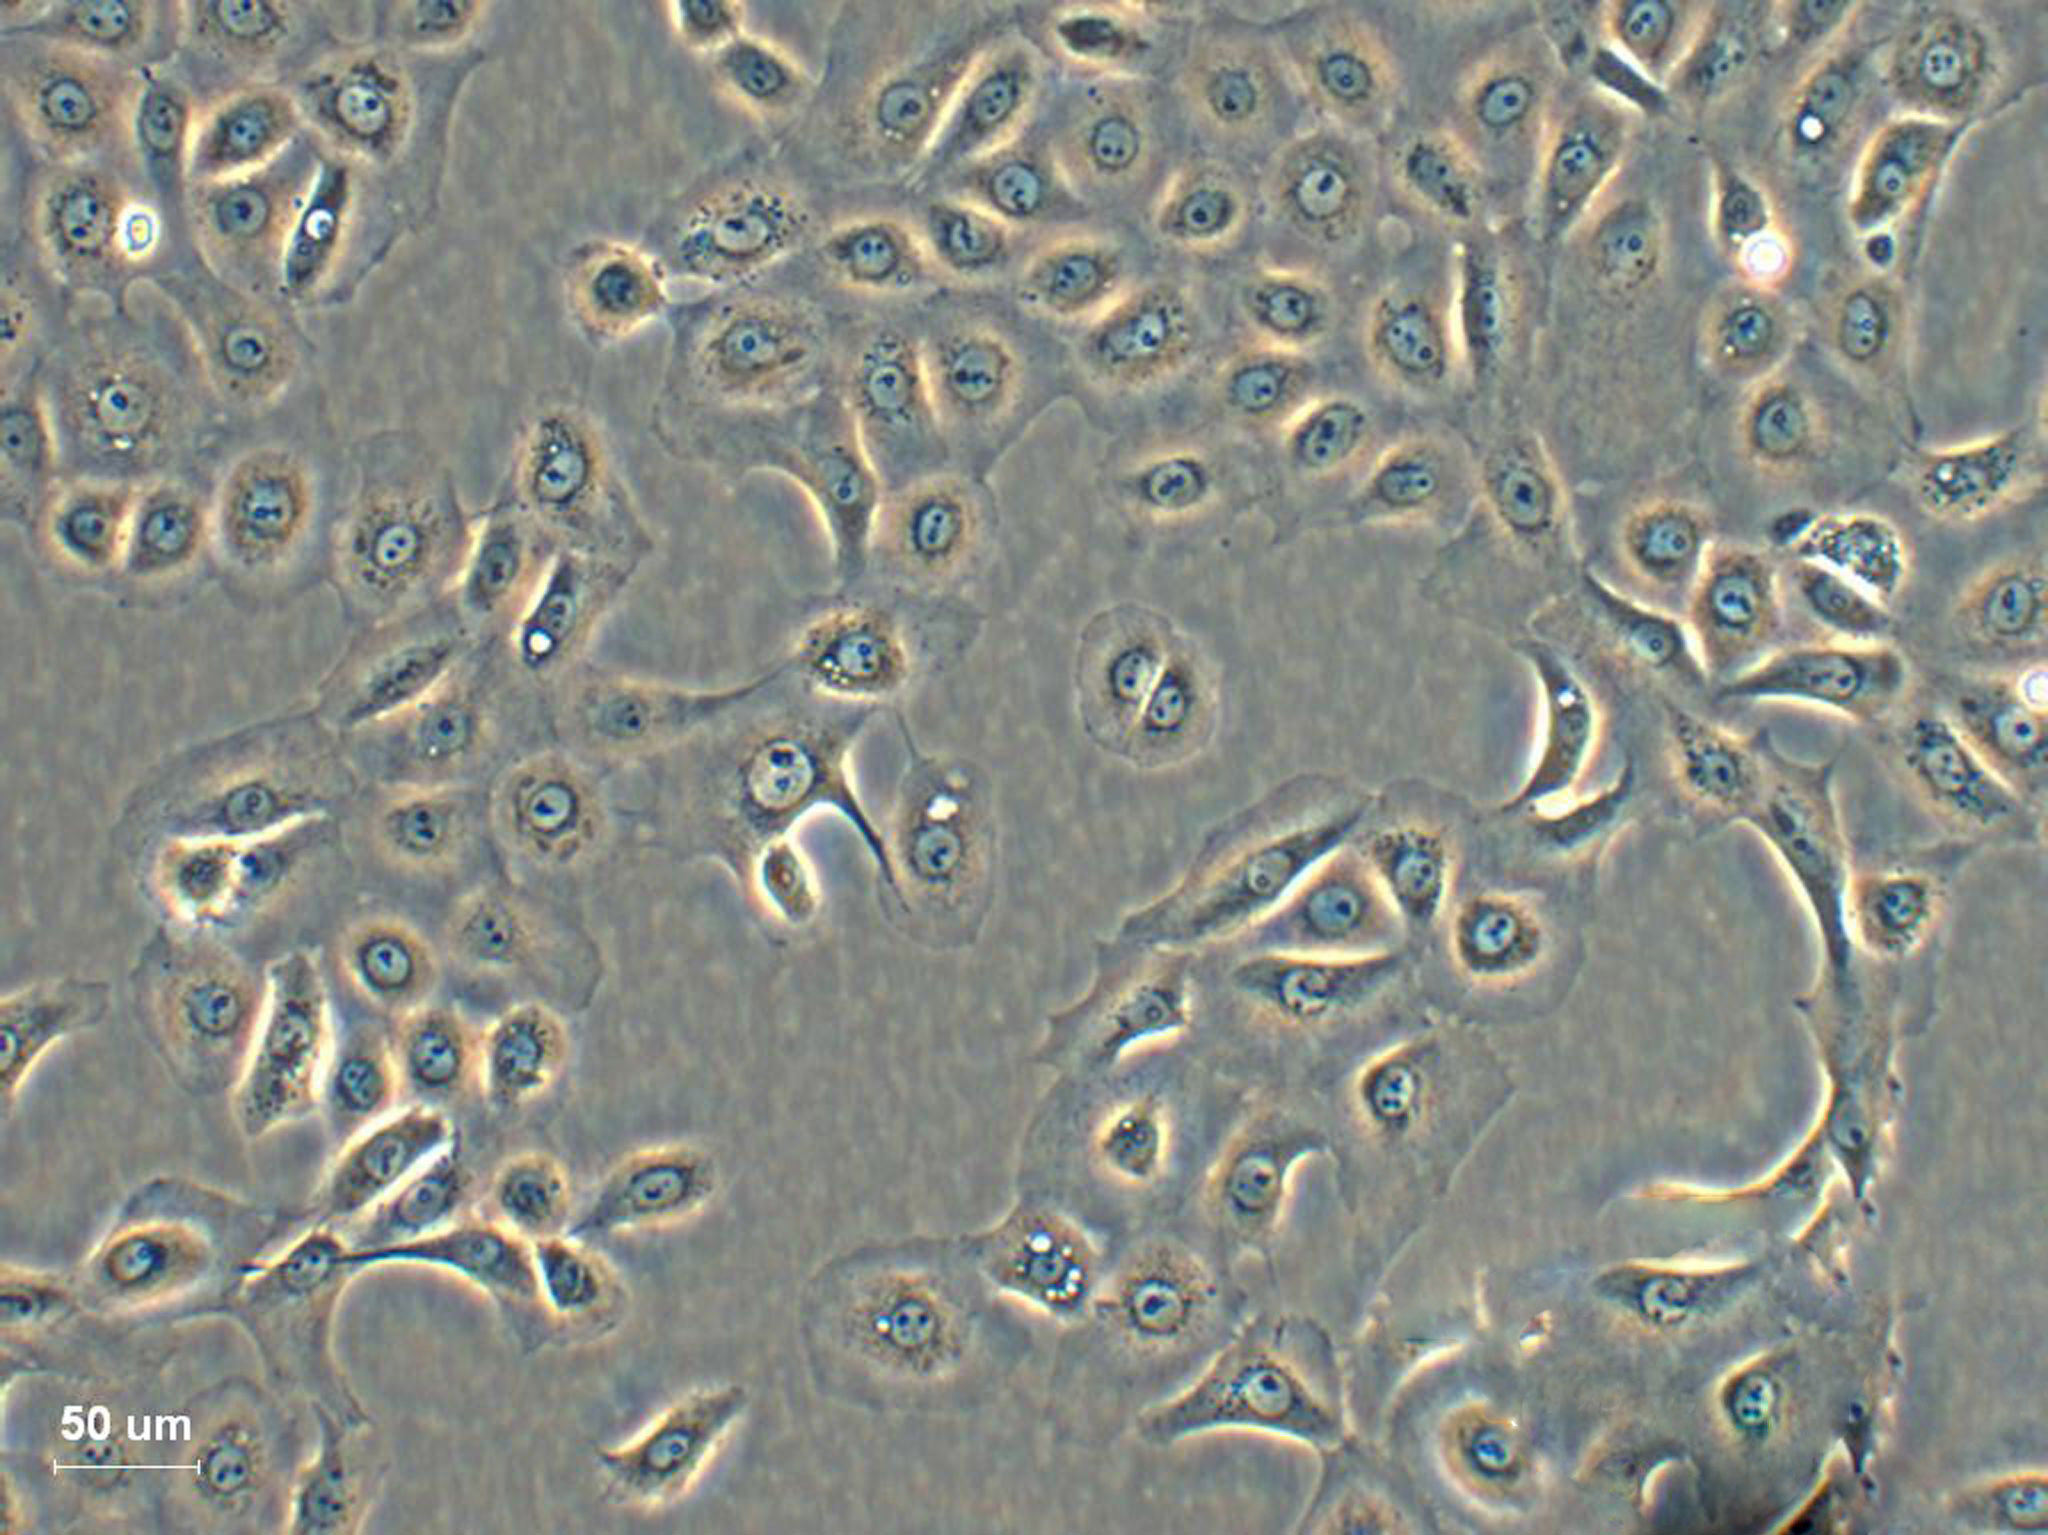 BT-20 epithelioid cells人乳腺癌细胞系,BT-20 epithelioid cells